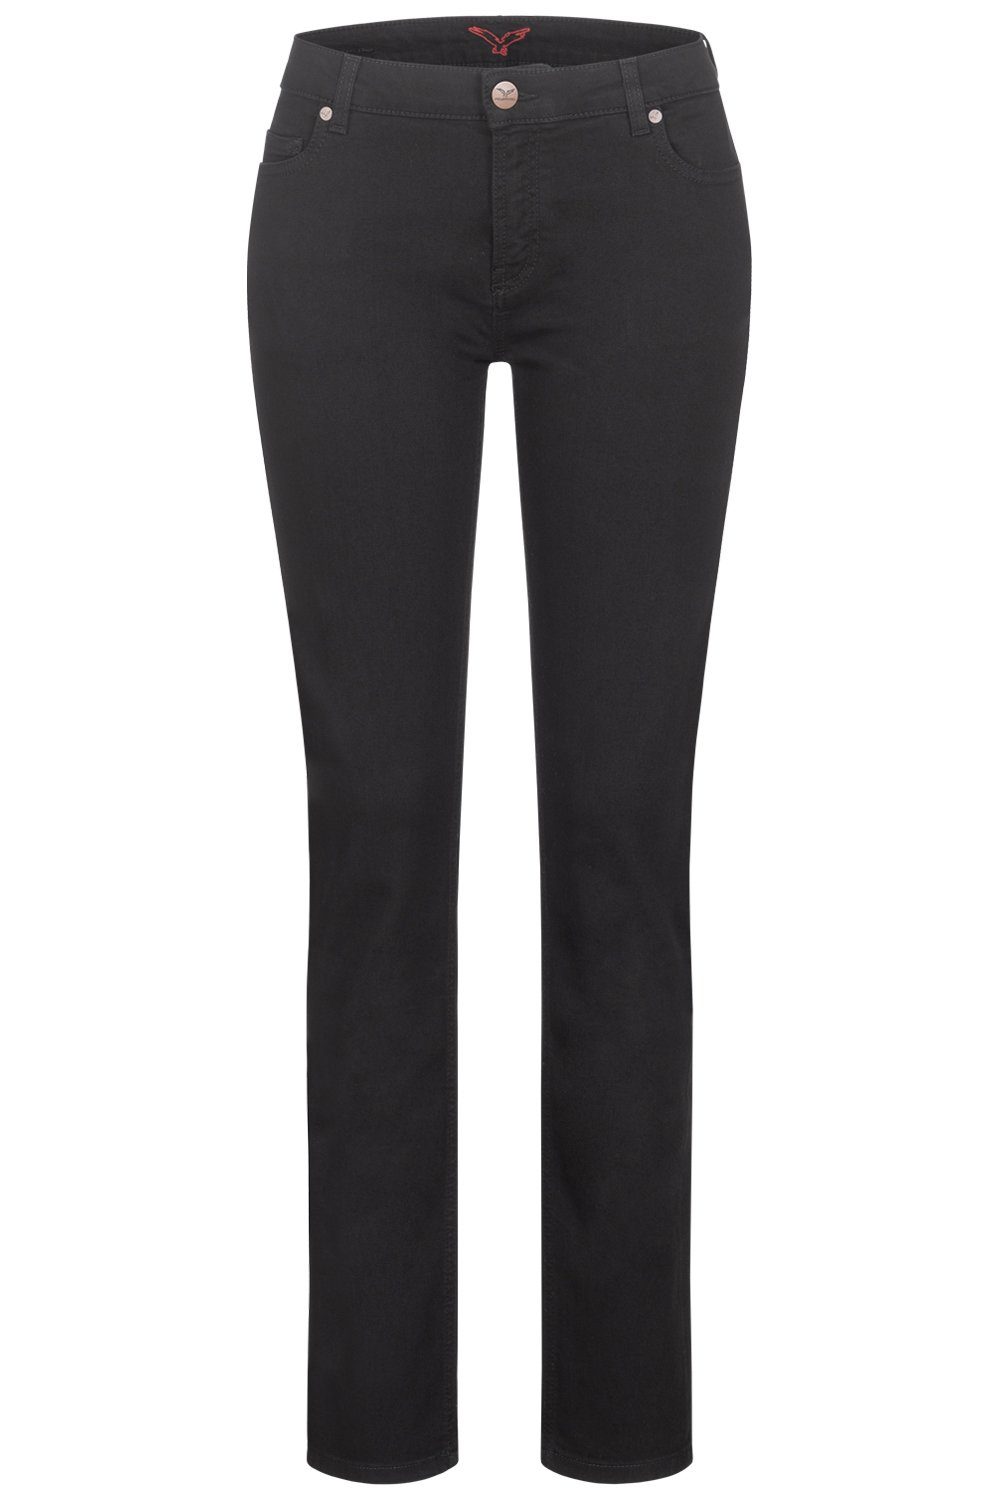 Black Medium Damenjeans 5-Pocket-Jeans Waist, 5-Pocket-Style, Slim fv-Sve:nja, Slim Fit, Black Waist, Feuervogl Fit Medium